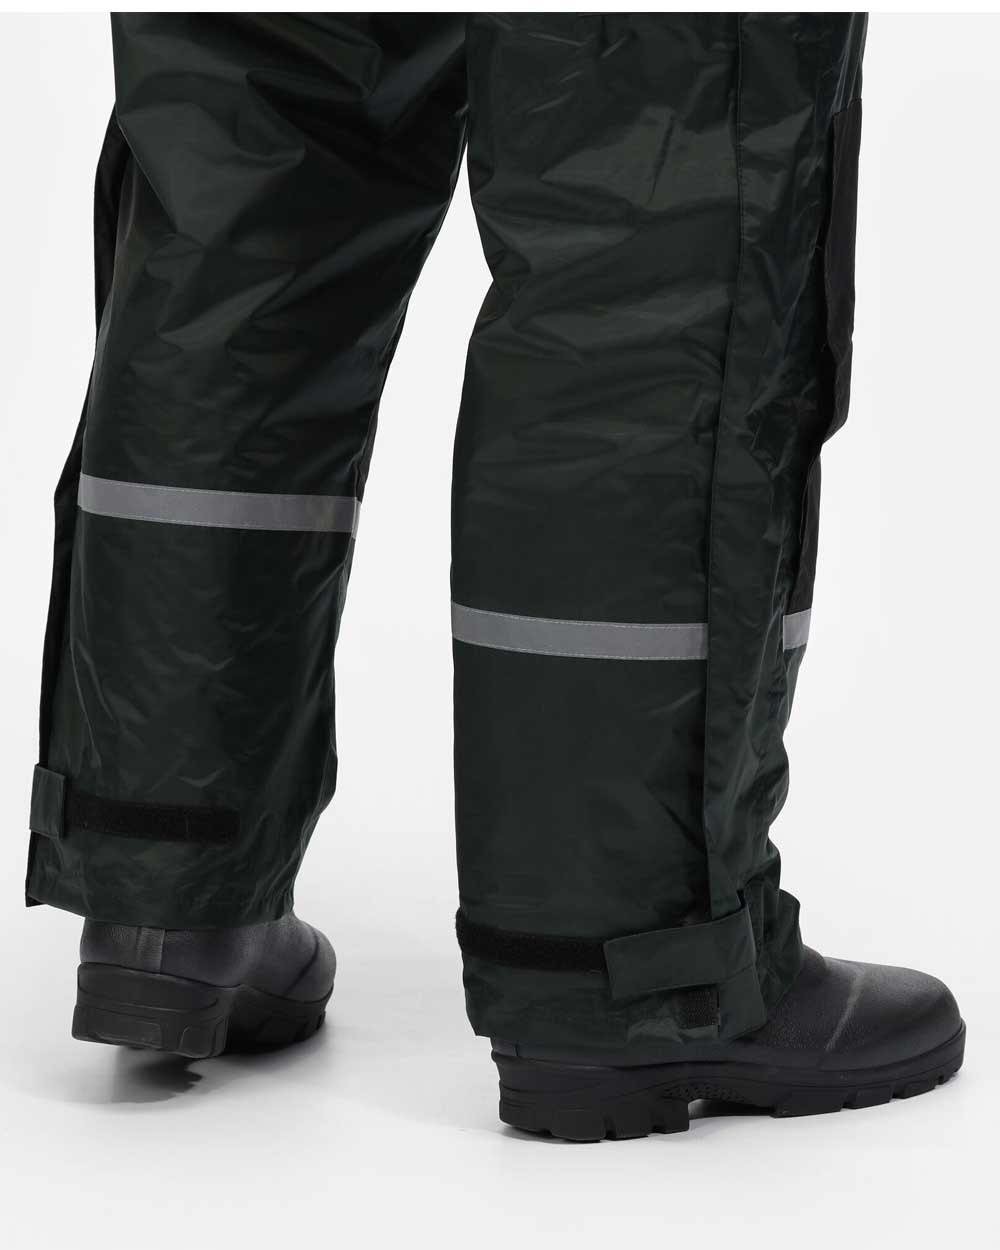 Leg adjusters Regatta Pro Waterproof Insulated Coverall in Olive 